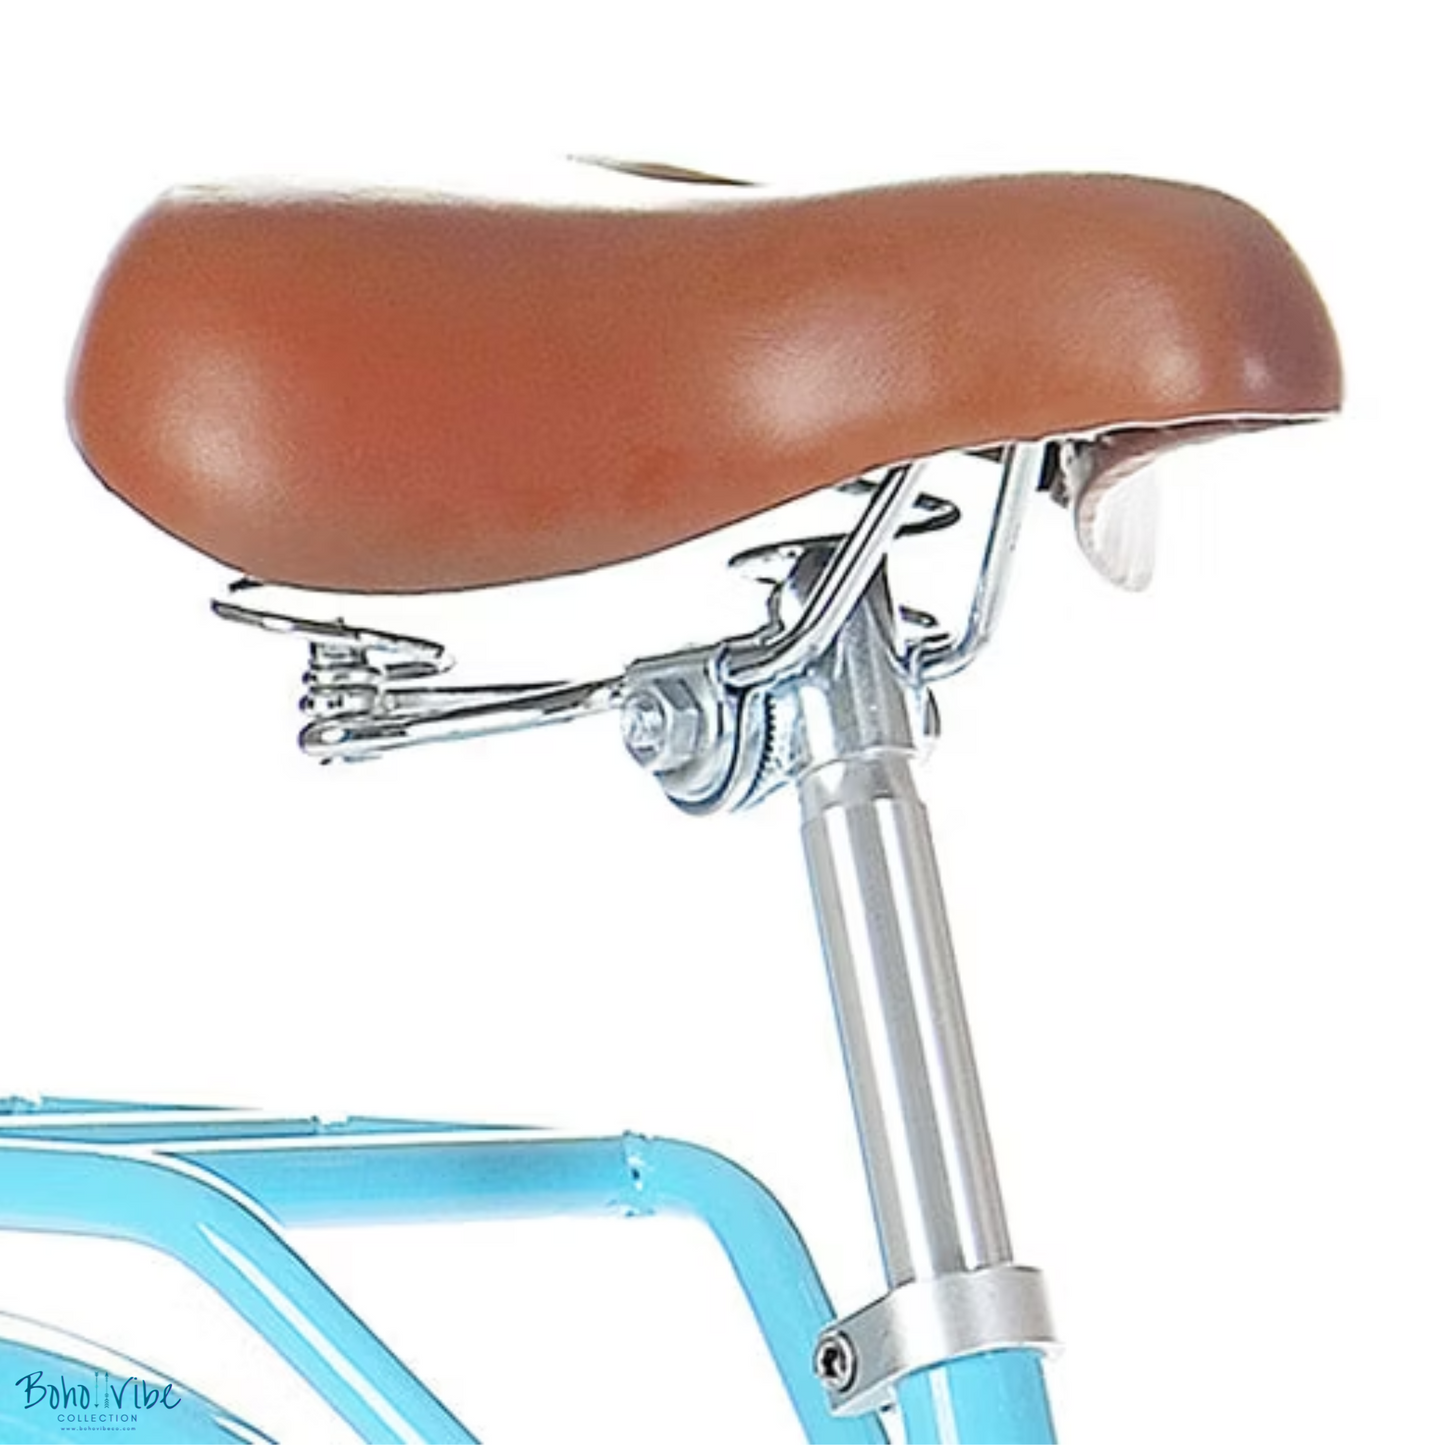 Boho ↡↟ Vibe Collection ↠  Vintage Cruiser Progear Pomona Coastal Commuter Bike Blue Ladies Teen 15" with Basket 